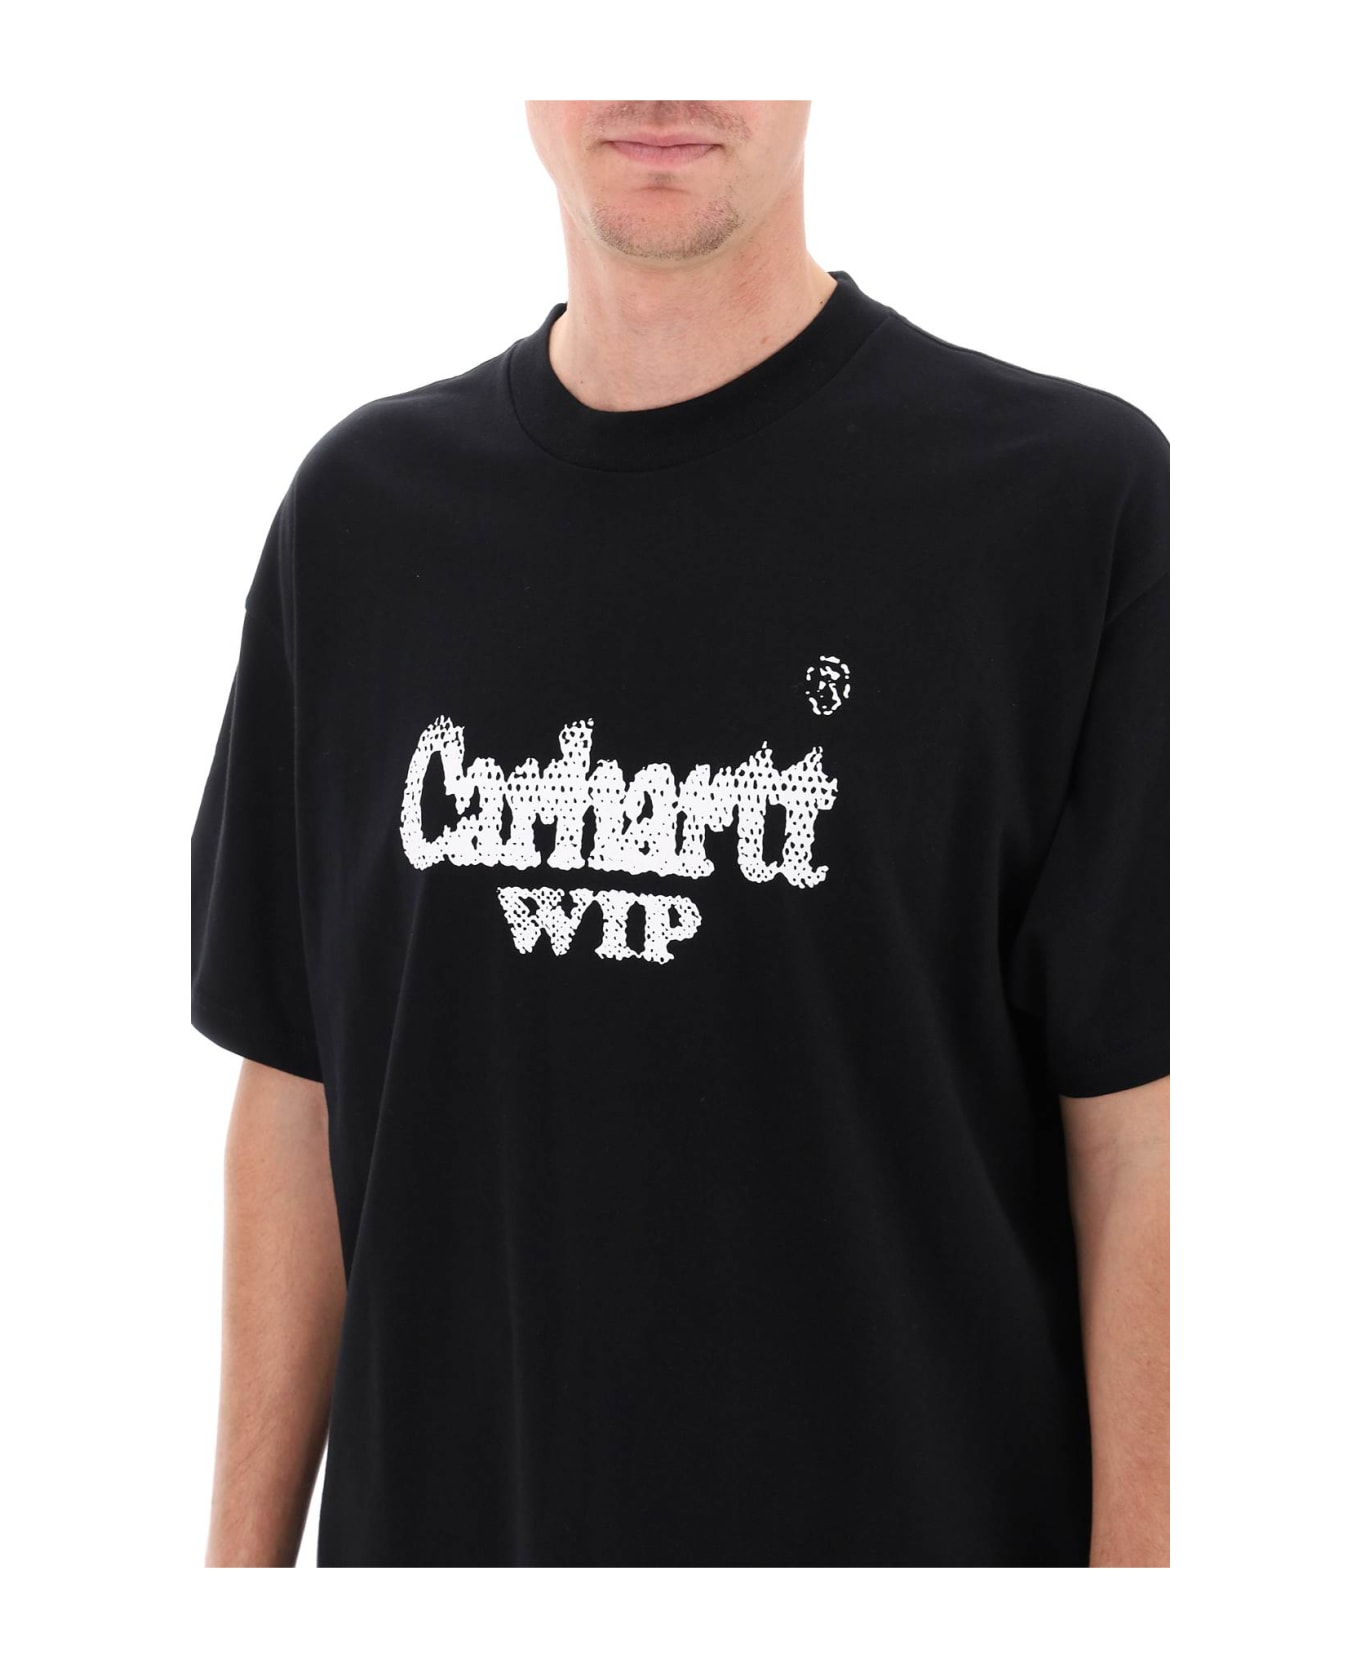 Carhartt Spree Halftone Printed T-shirt - BLACK WHITE (Black)